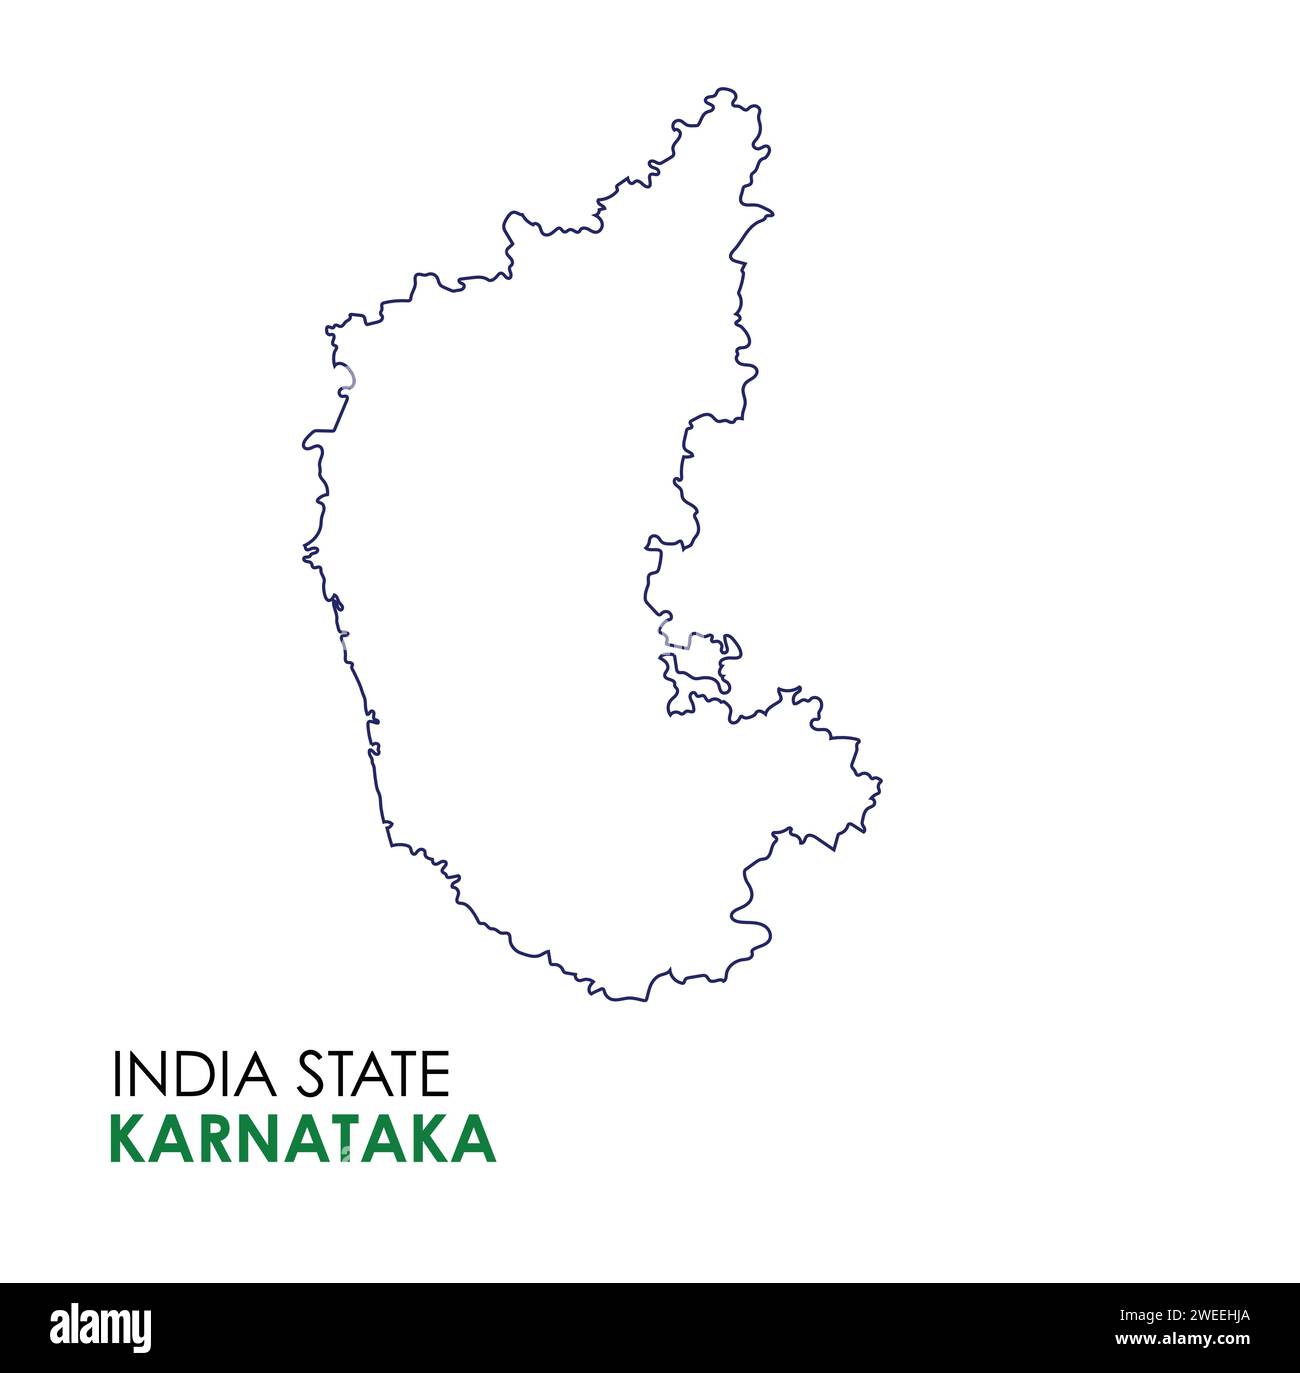 Karnataka map of Indian state. Karnataka map vector illustration. Karnataka map on white background. Stock Vector